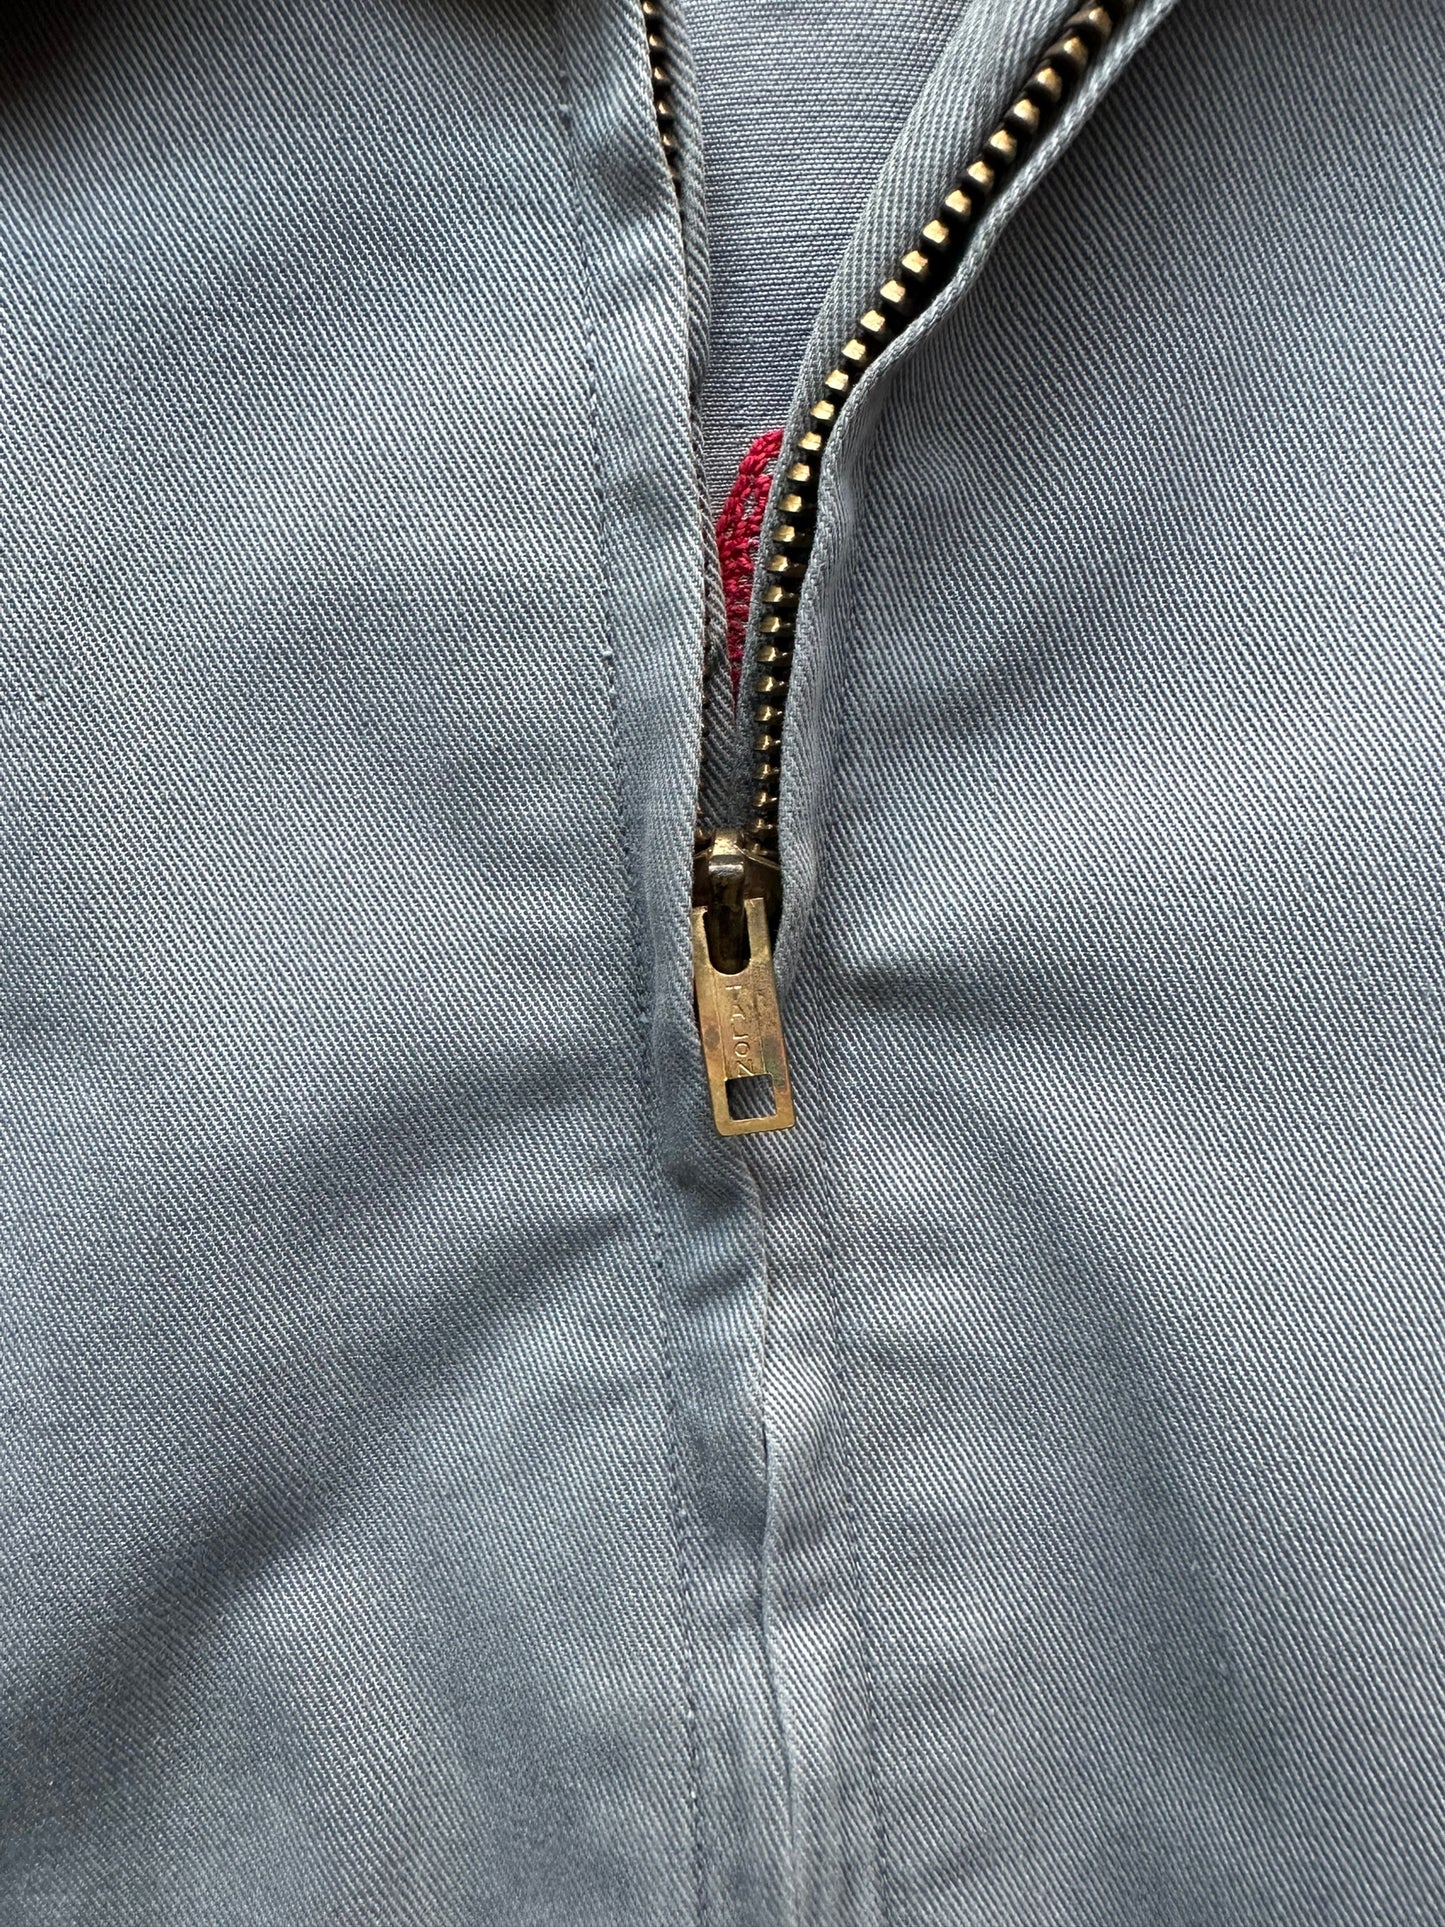 Talon Zipper on Vintage Grey Chainstitched Siegels Uniform Workwear Jacket SZ M | Vintage Workwear Seattle | Barn Owl Vintage Goods